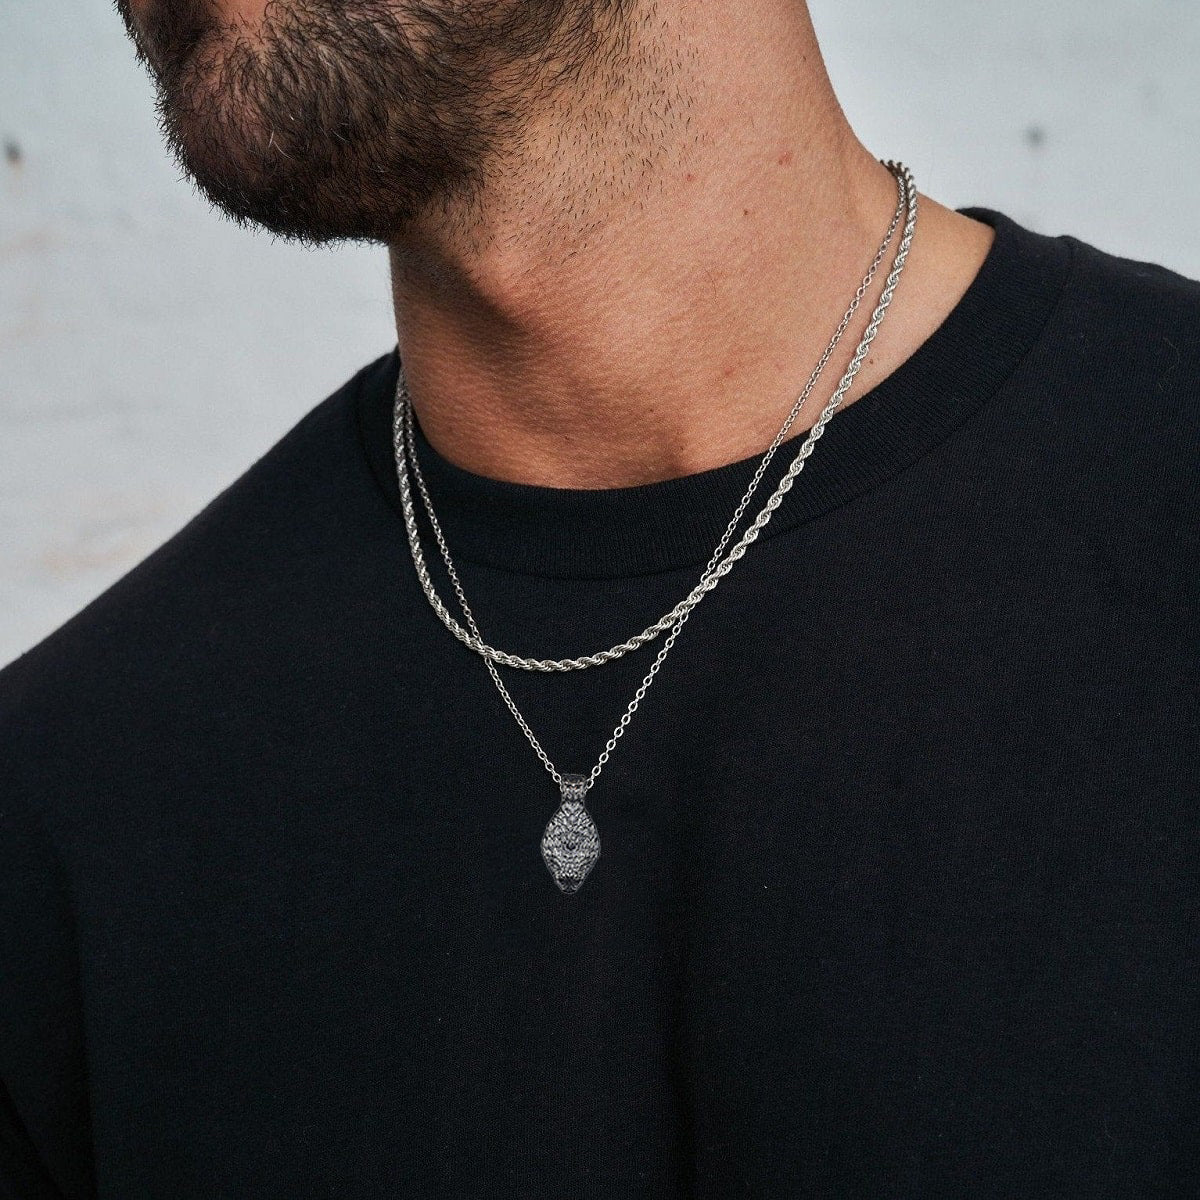 DYQ Jewelry Snake Men's Necklace Pendant 925 Silver